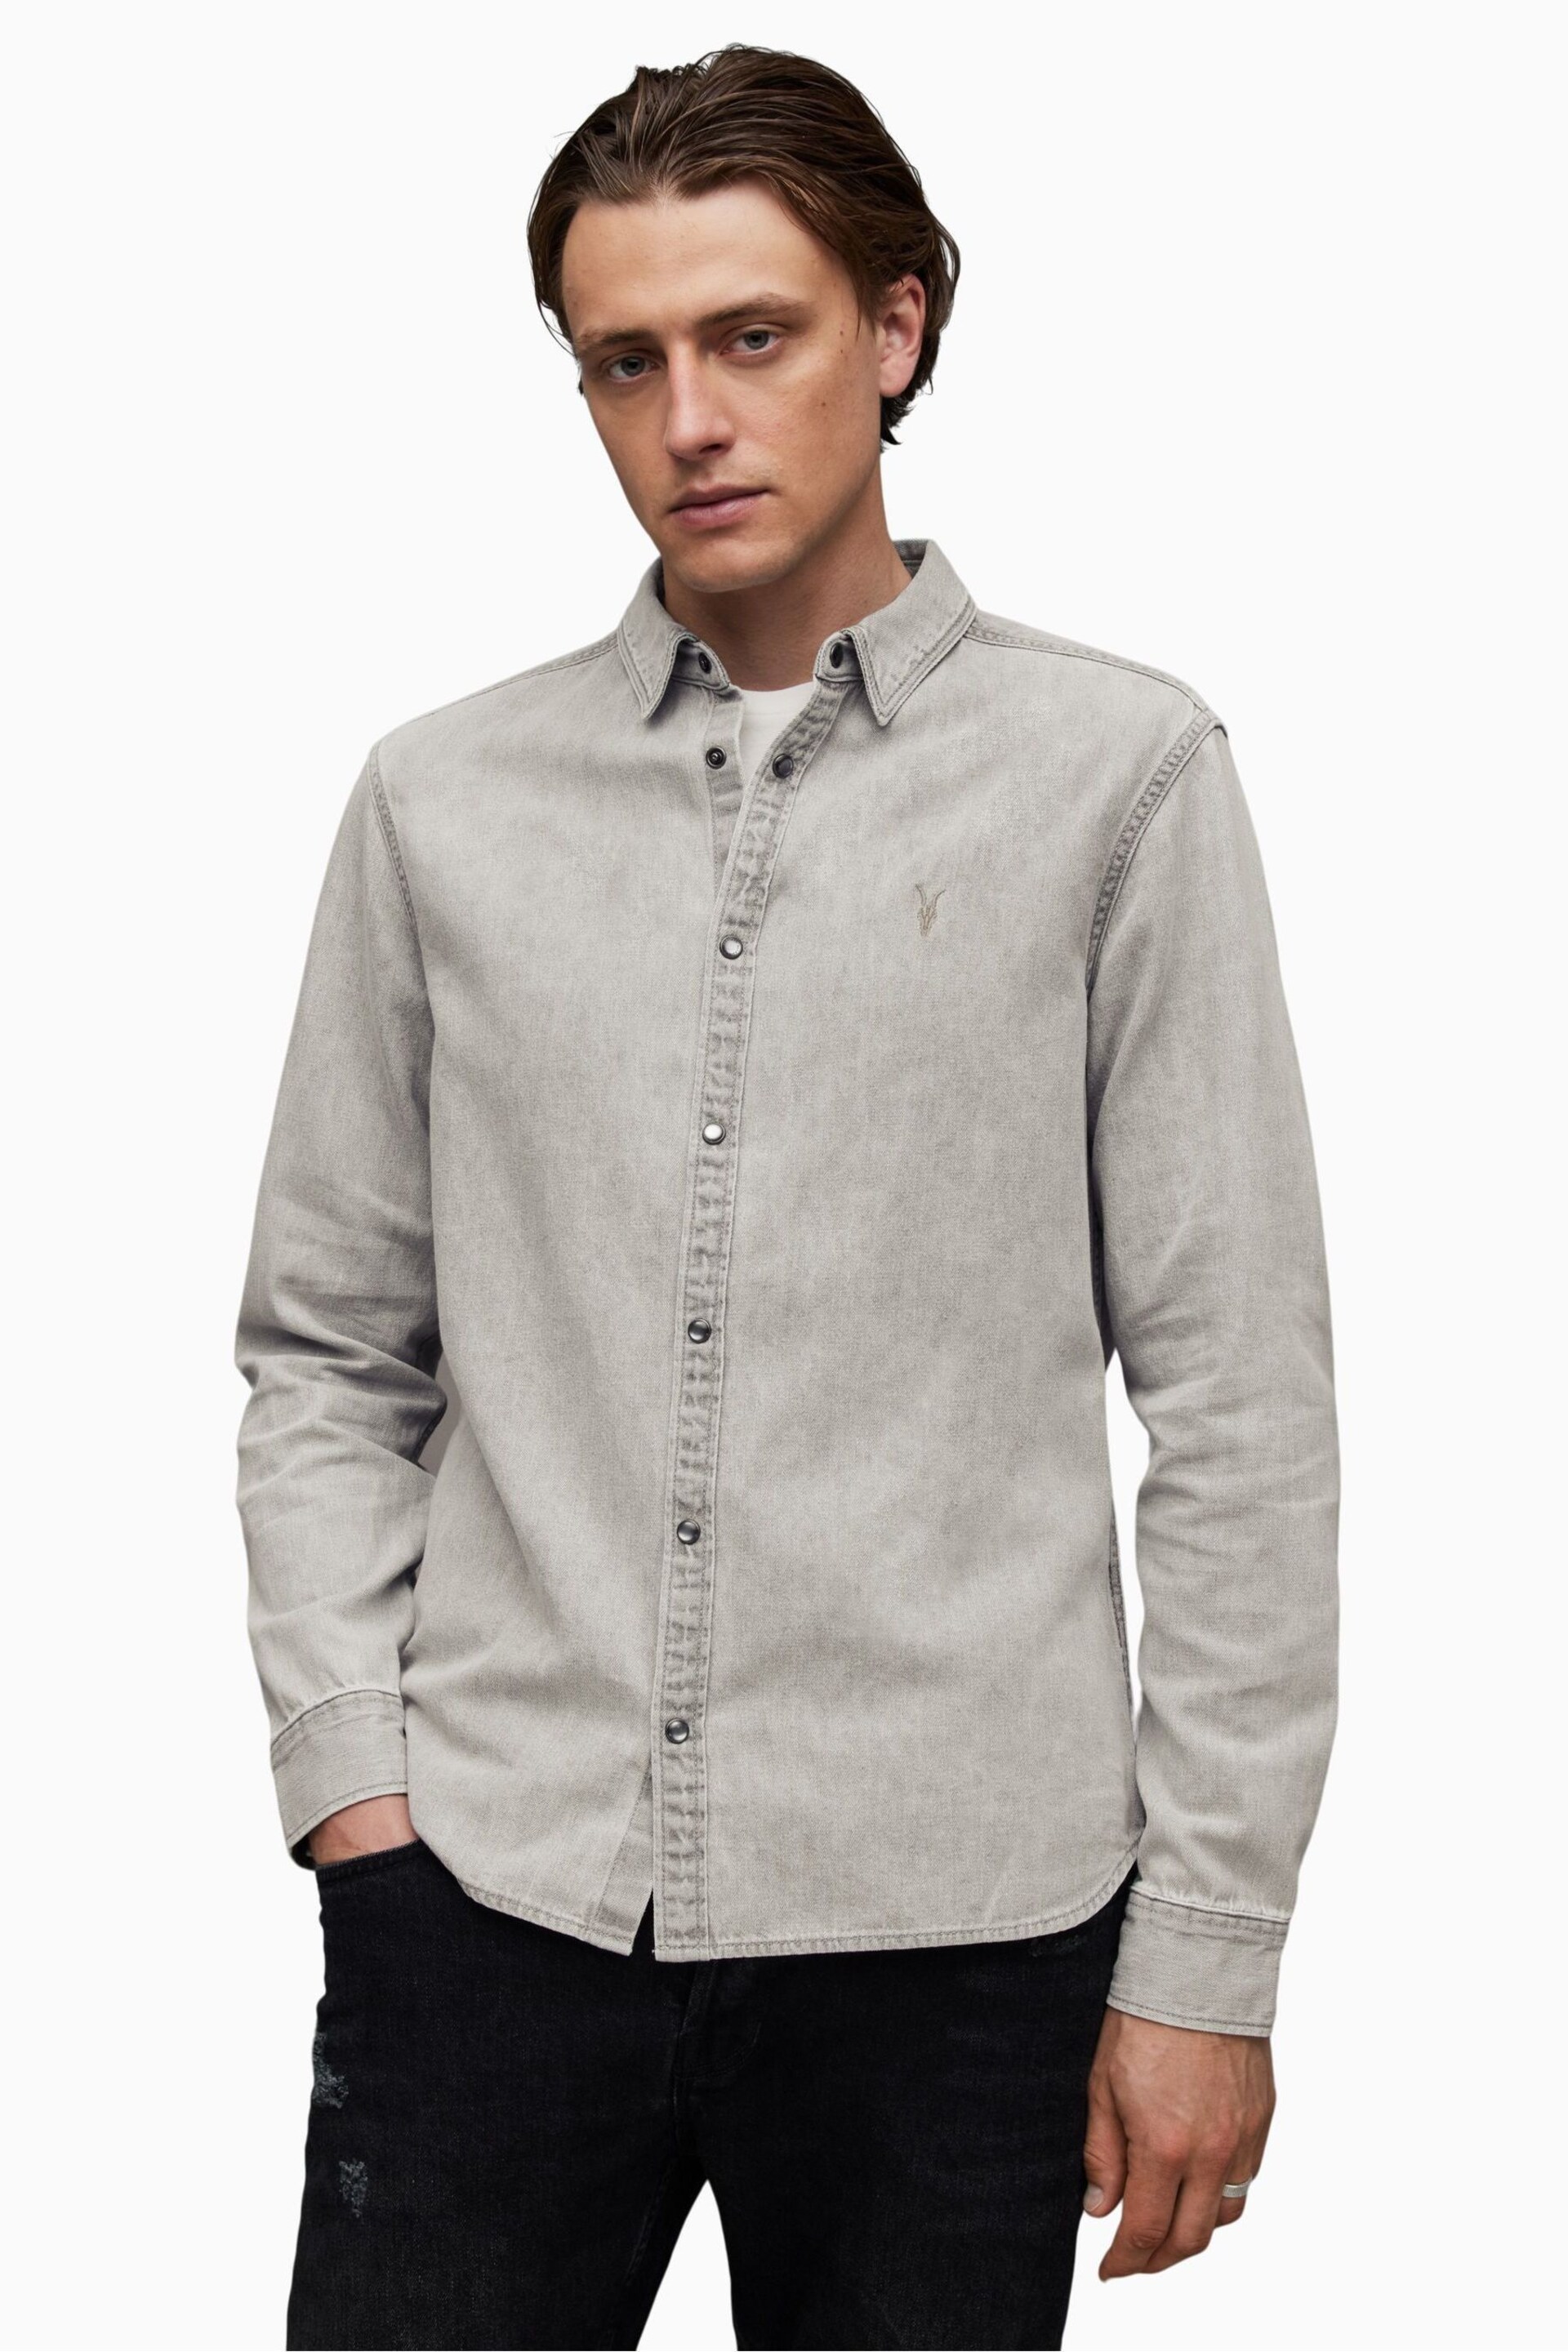 AllSaints Grey Gleason Long Sleeve Shirt - Image 1 of 6